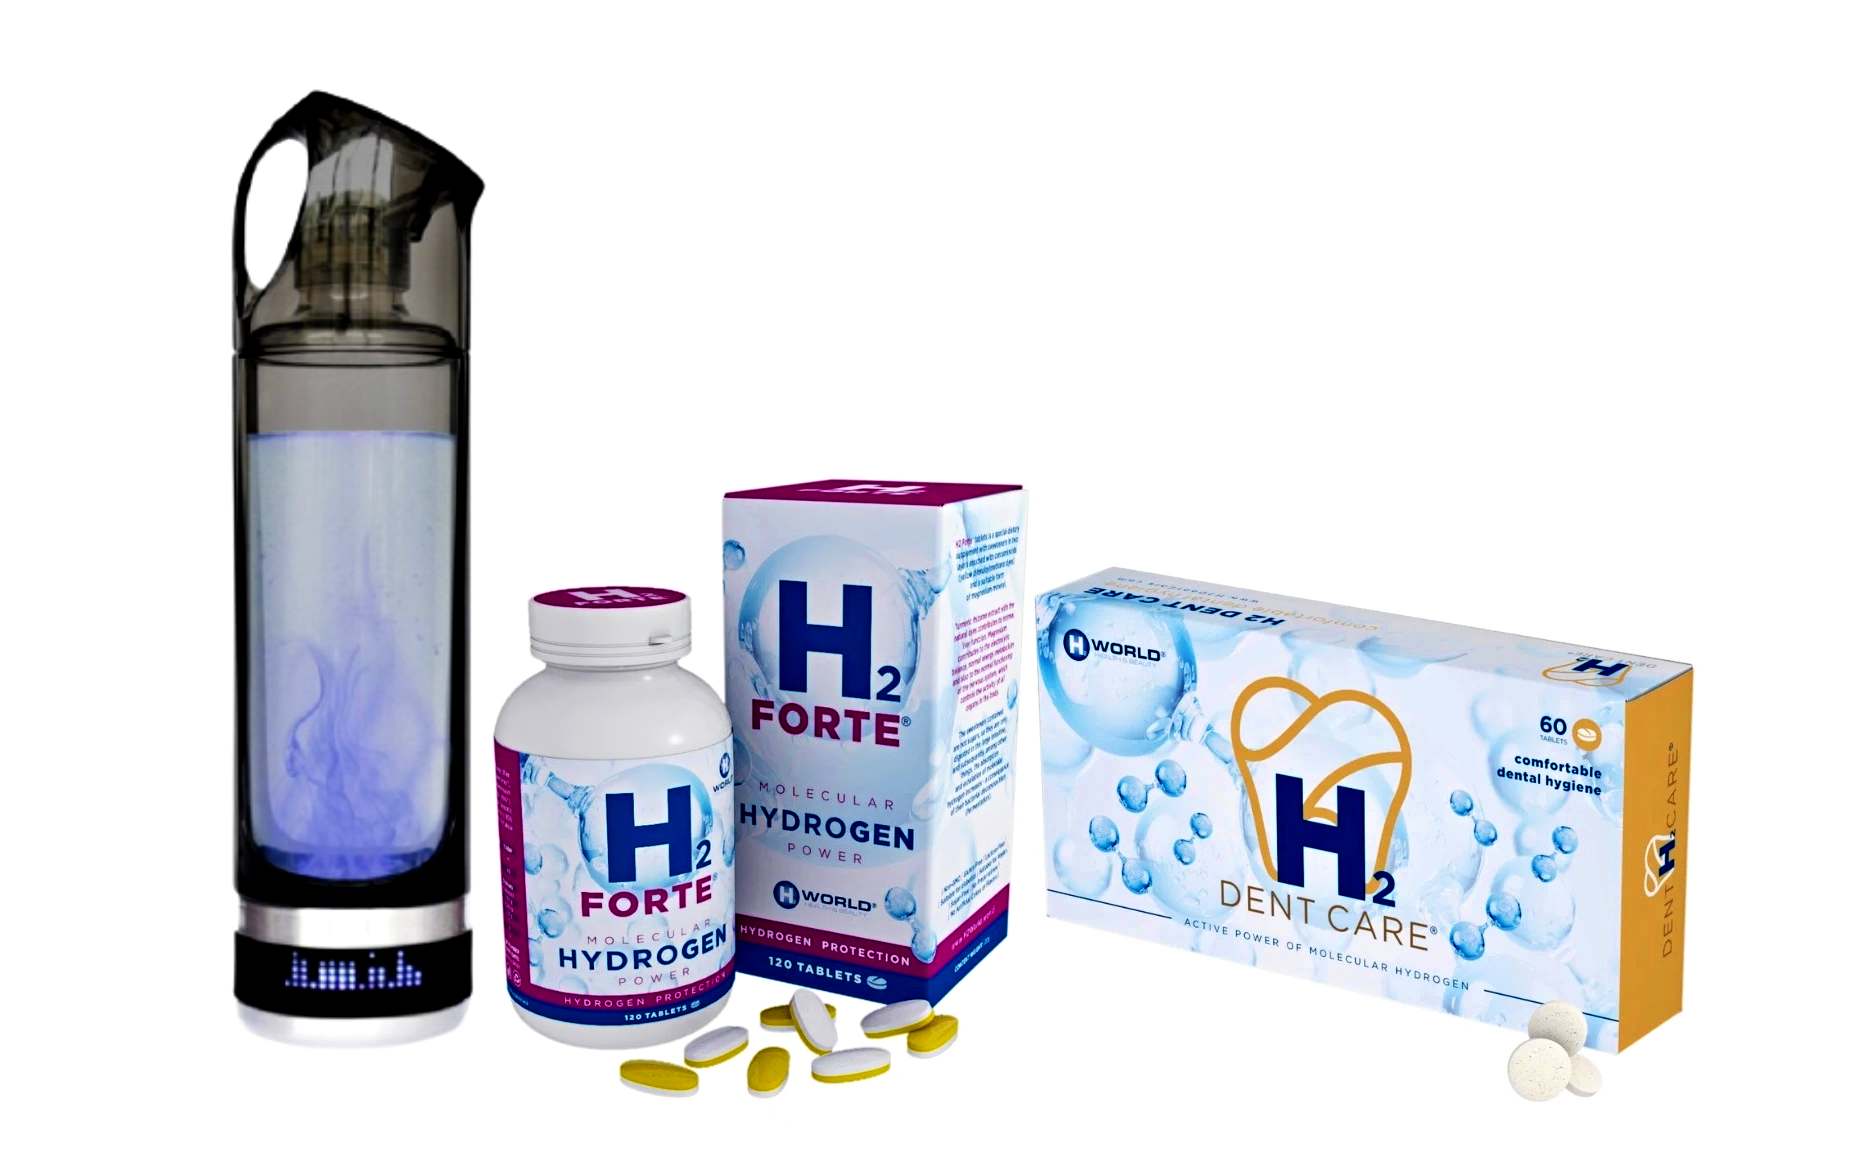 hydrogen-water-bottle-moekularny-vodik-tablety.jpg